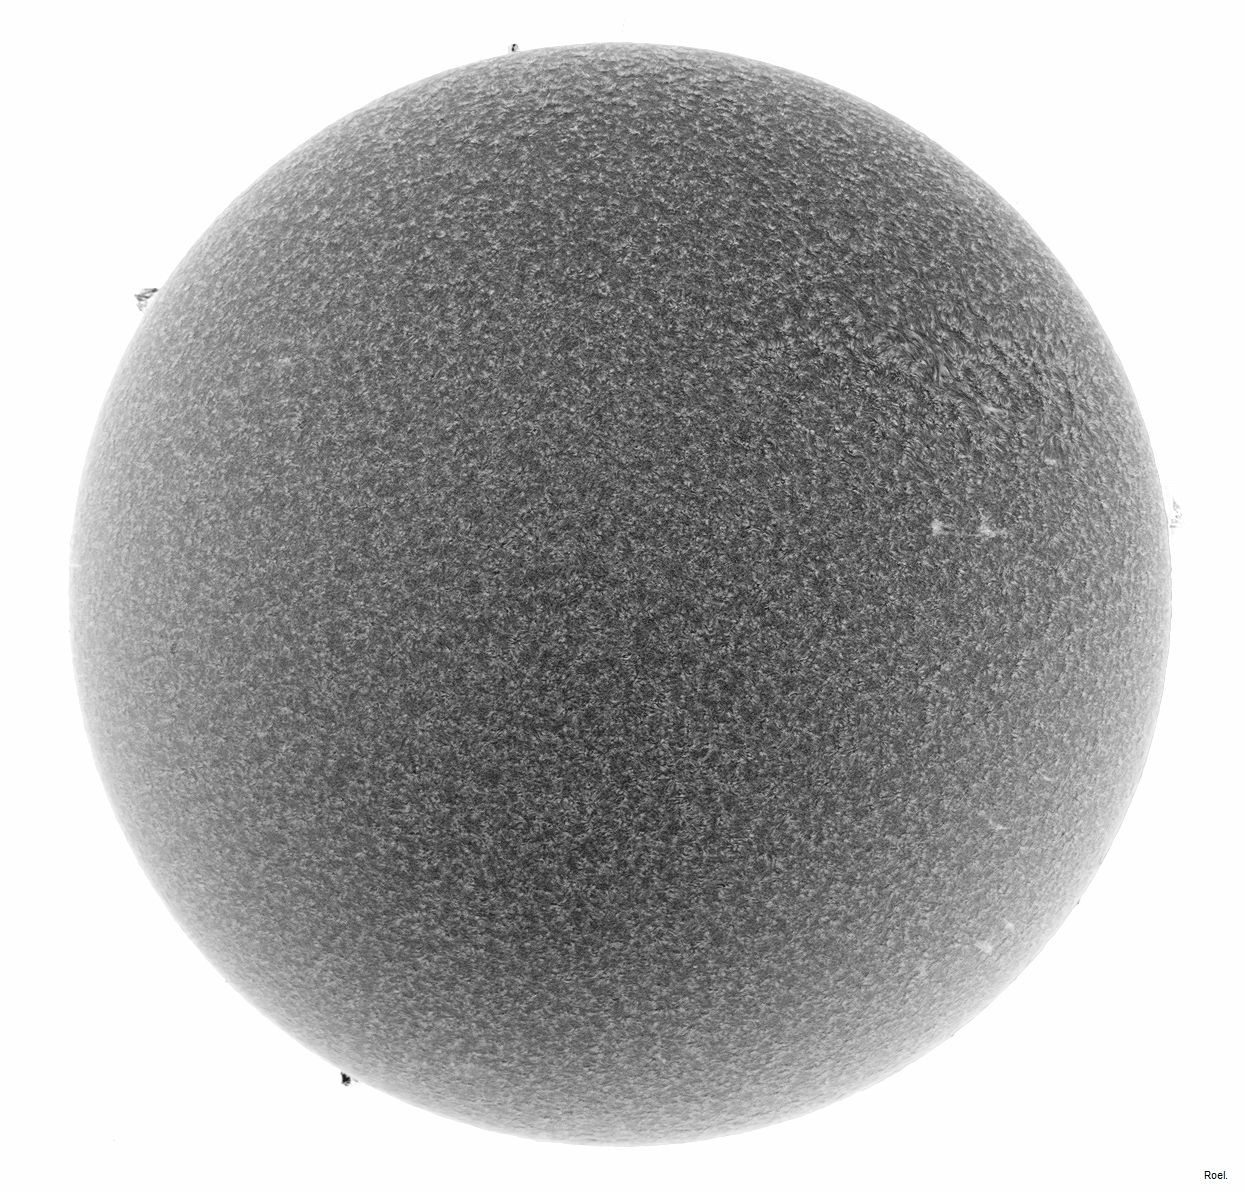 Sol del 26 de julio de 2018-Solarmax 90-DS-BF30-2neg.jpg